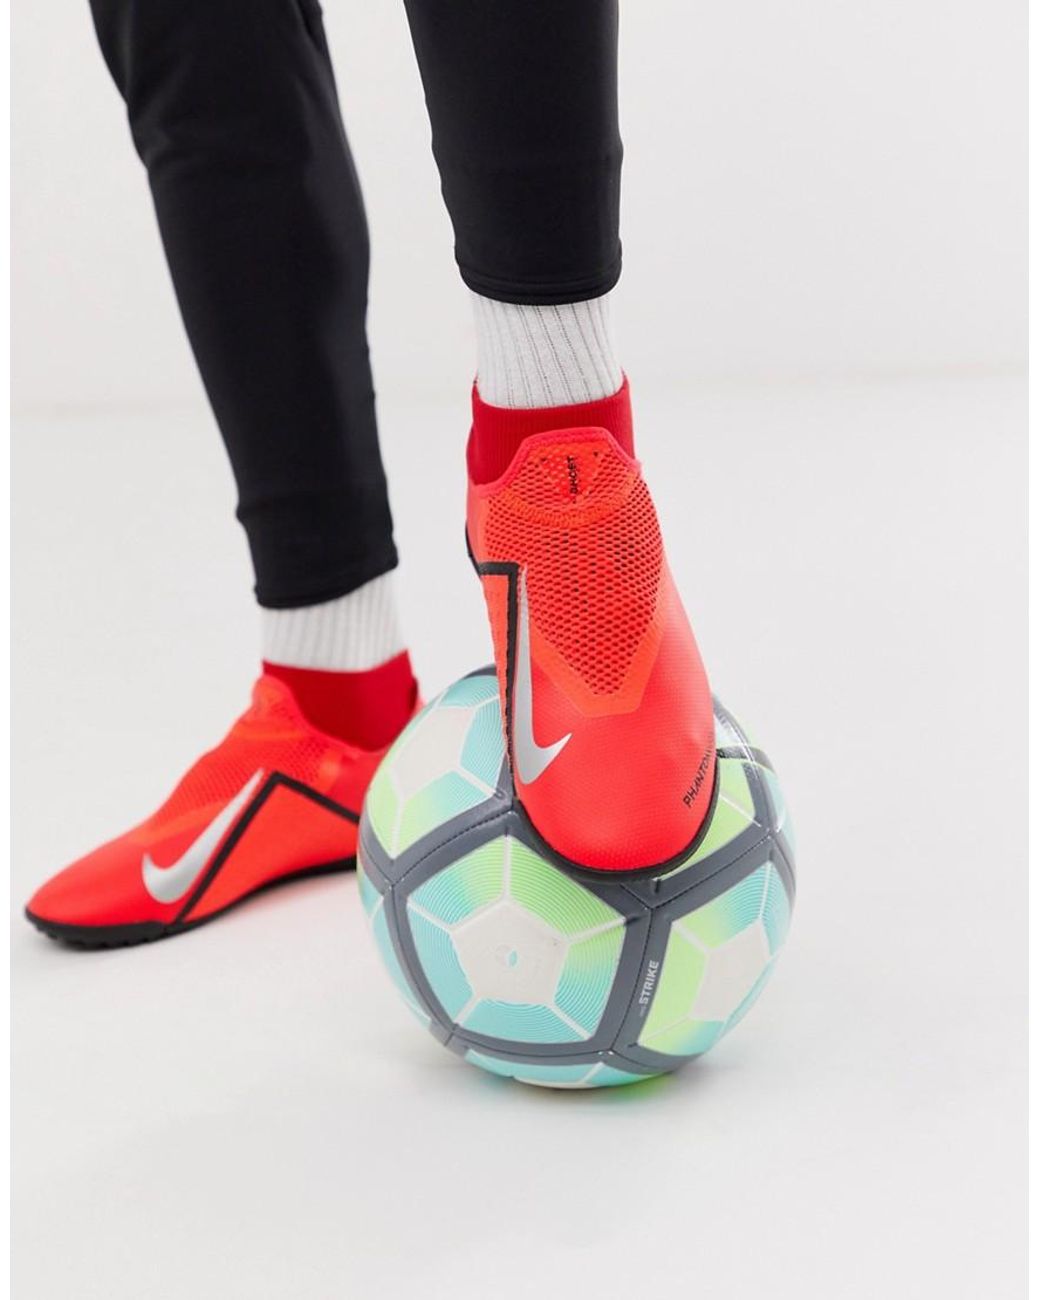 Phantom vision astro turf - Scarpe da calcio rosse da Uomo di Nike in Rosso  | Lyst